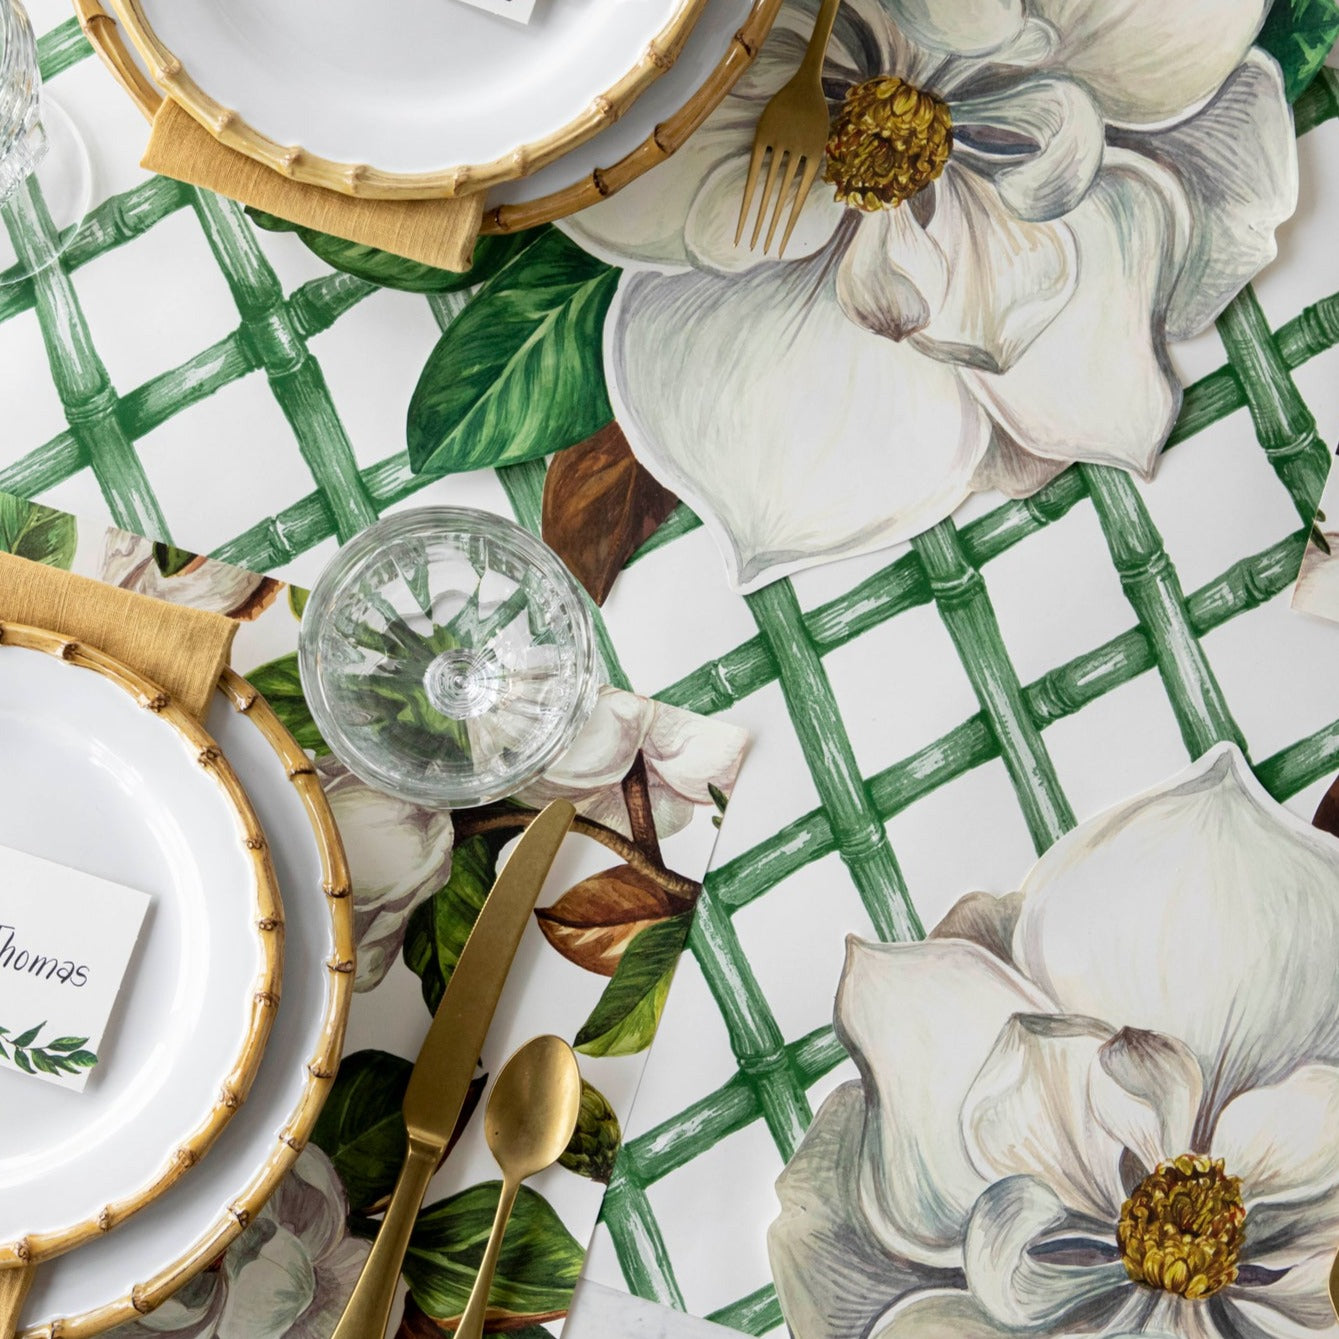 The Green Lattice Runner under an elegant table setting, from above.